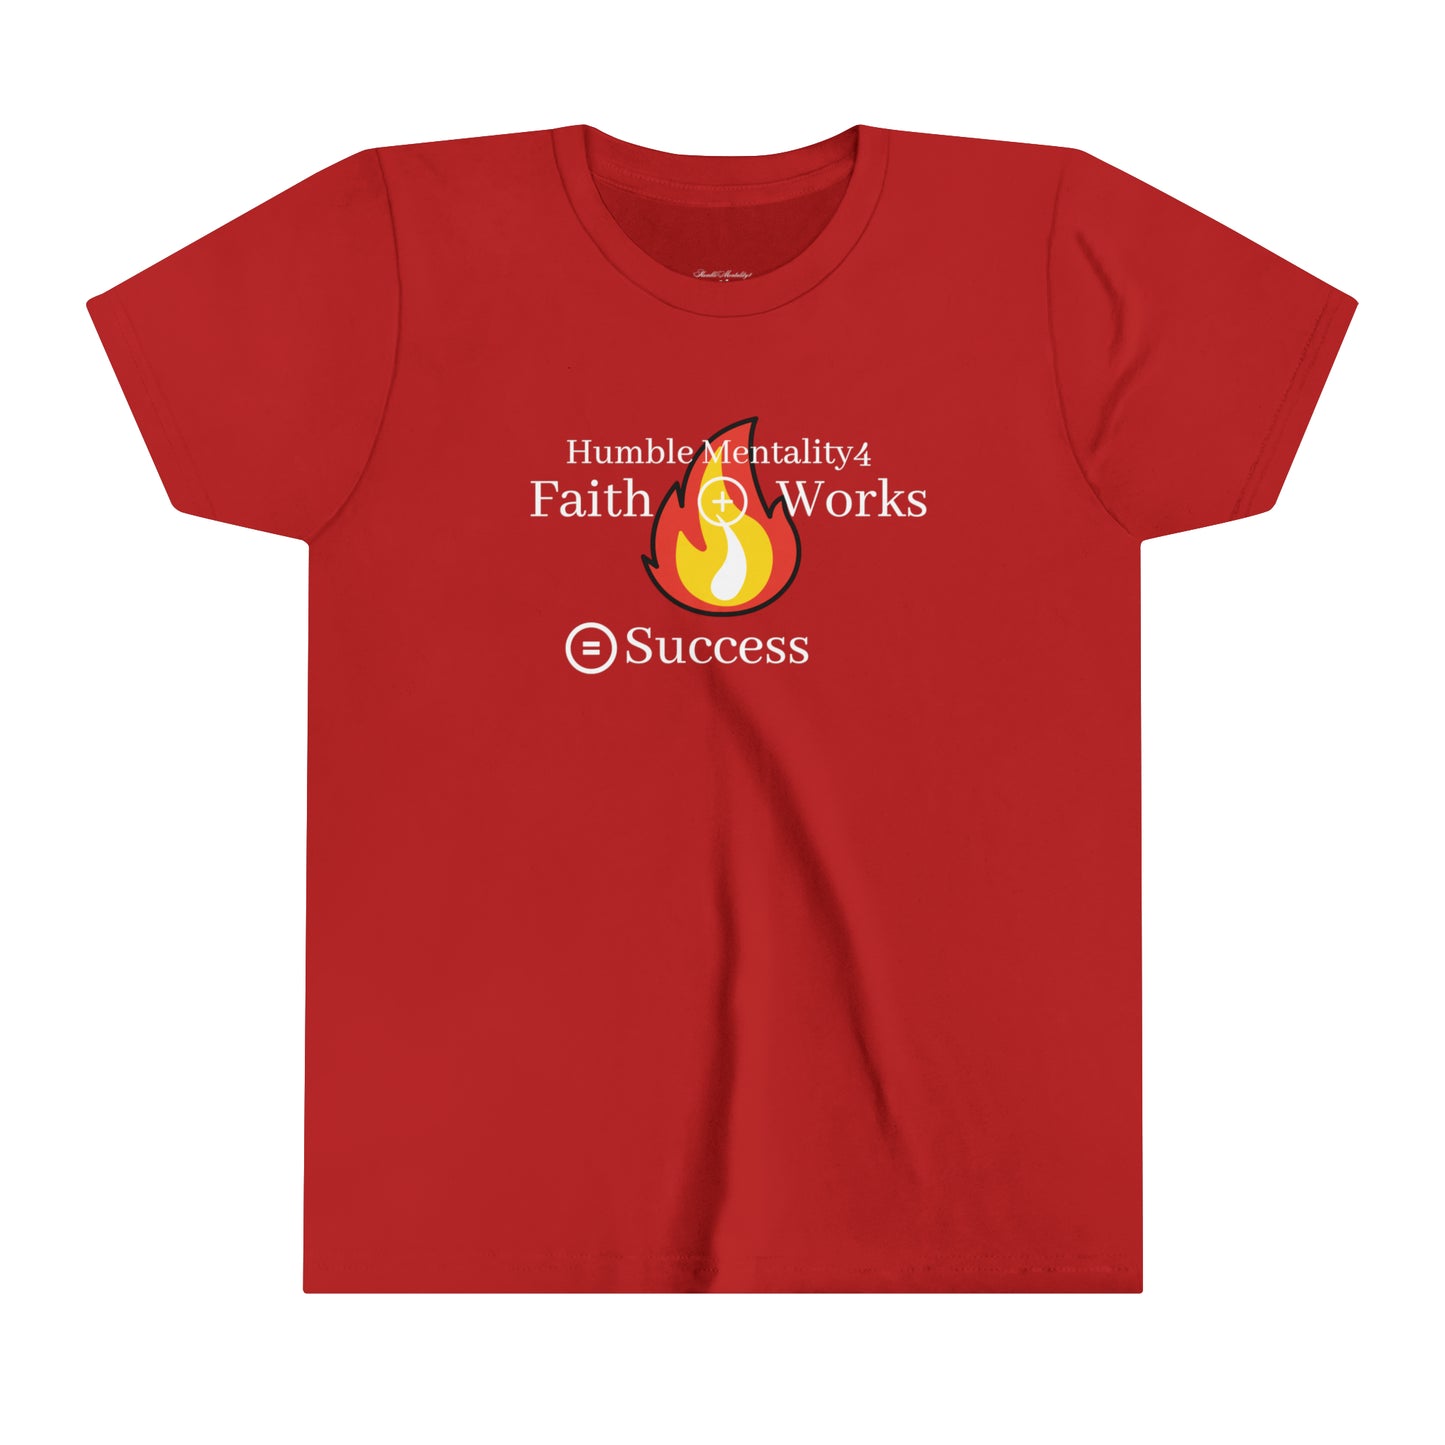 The Success T-Shirt